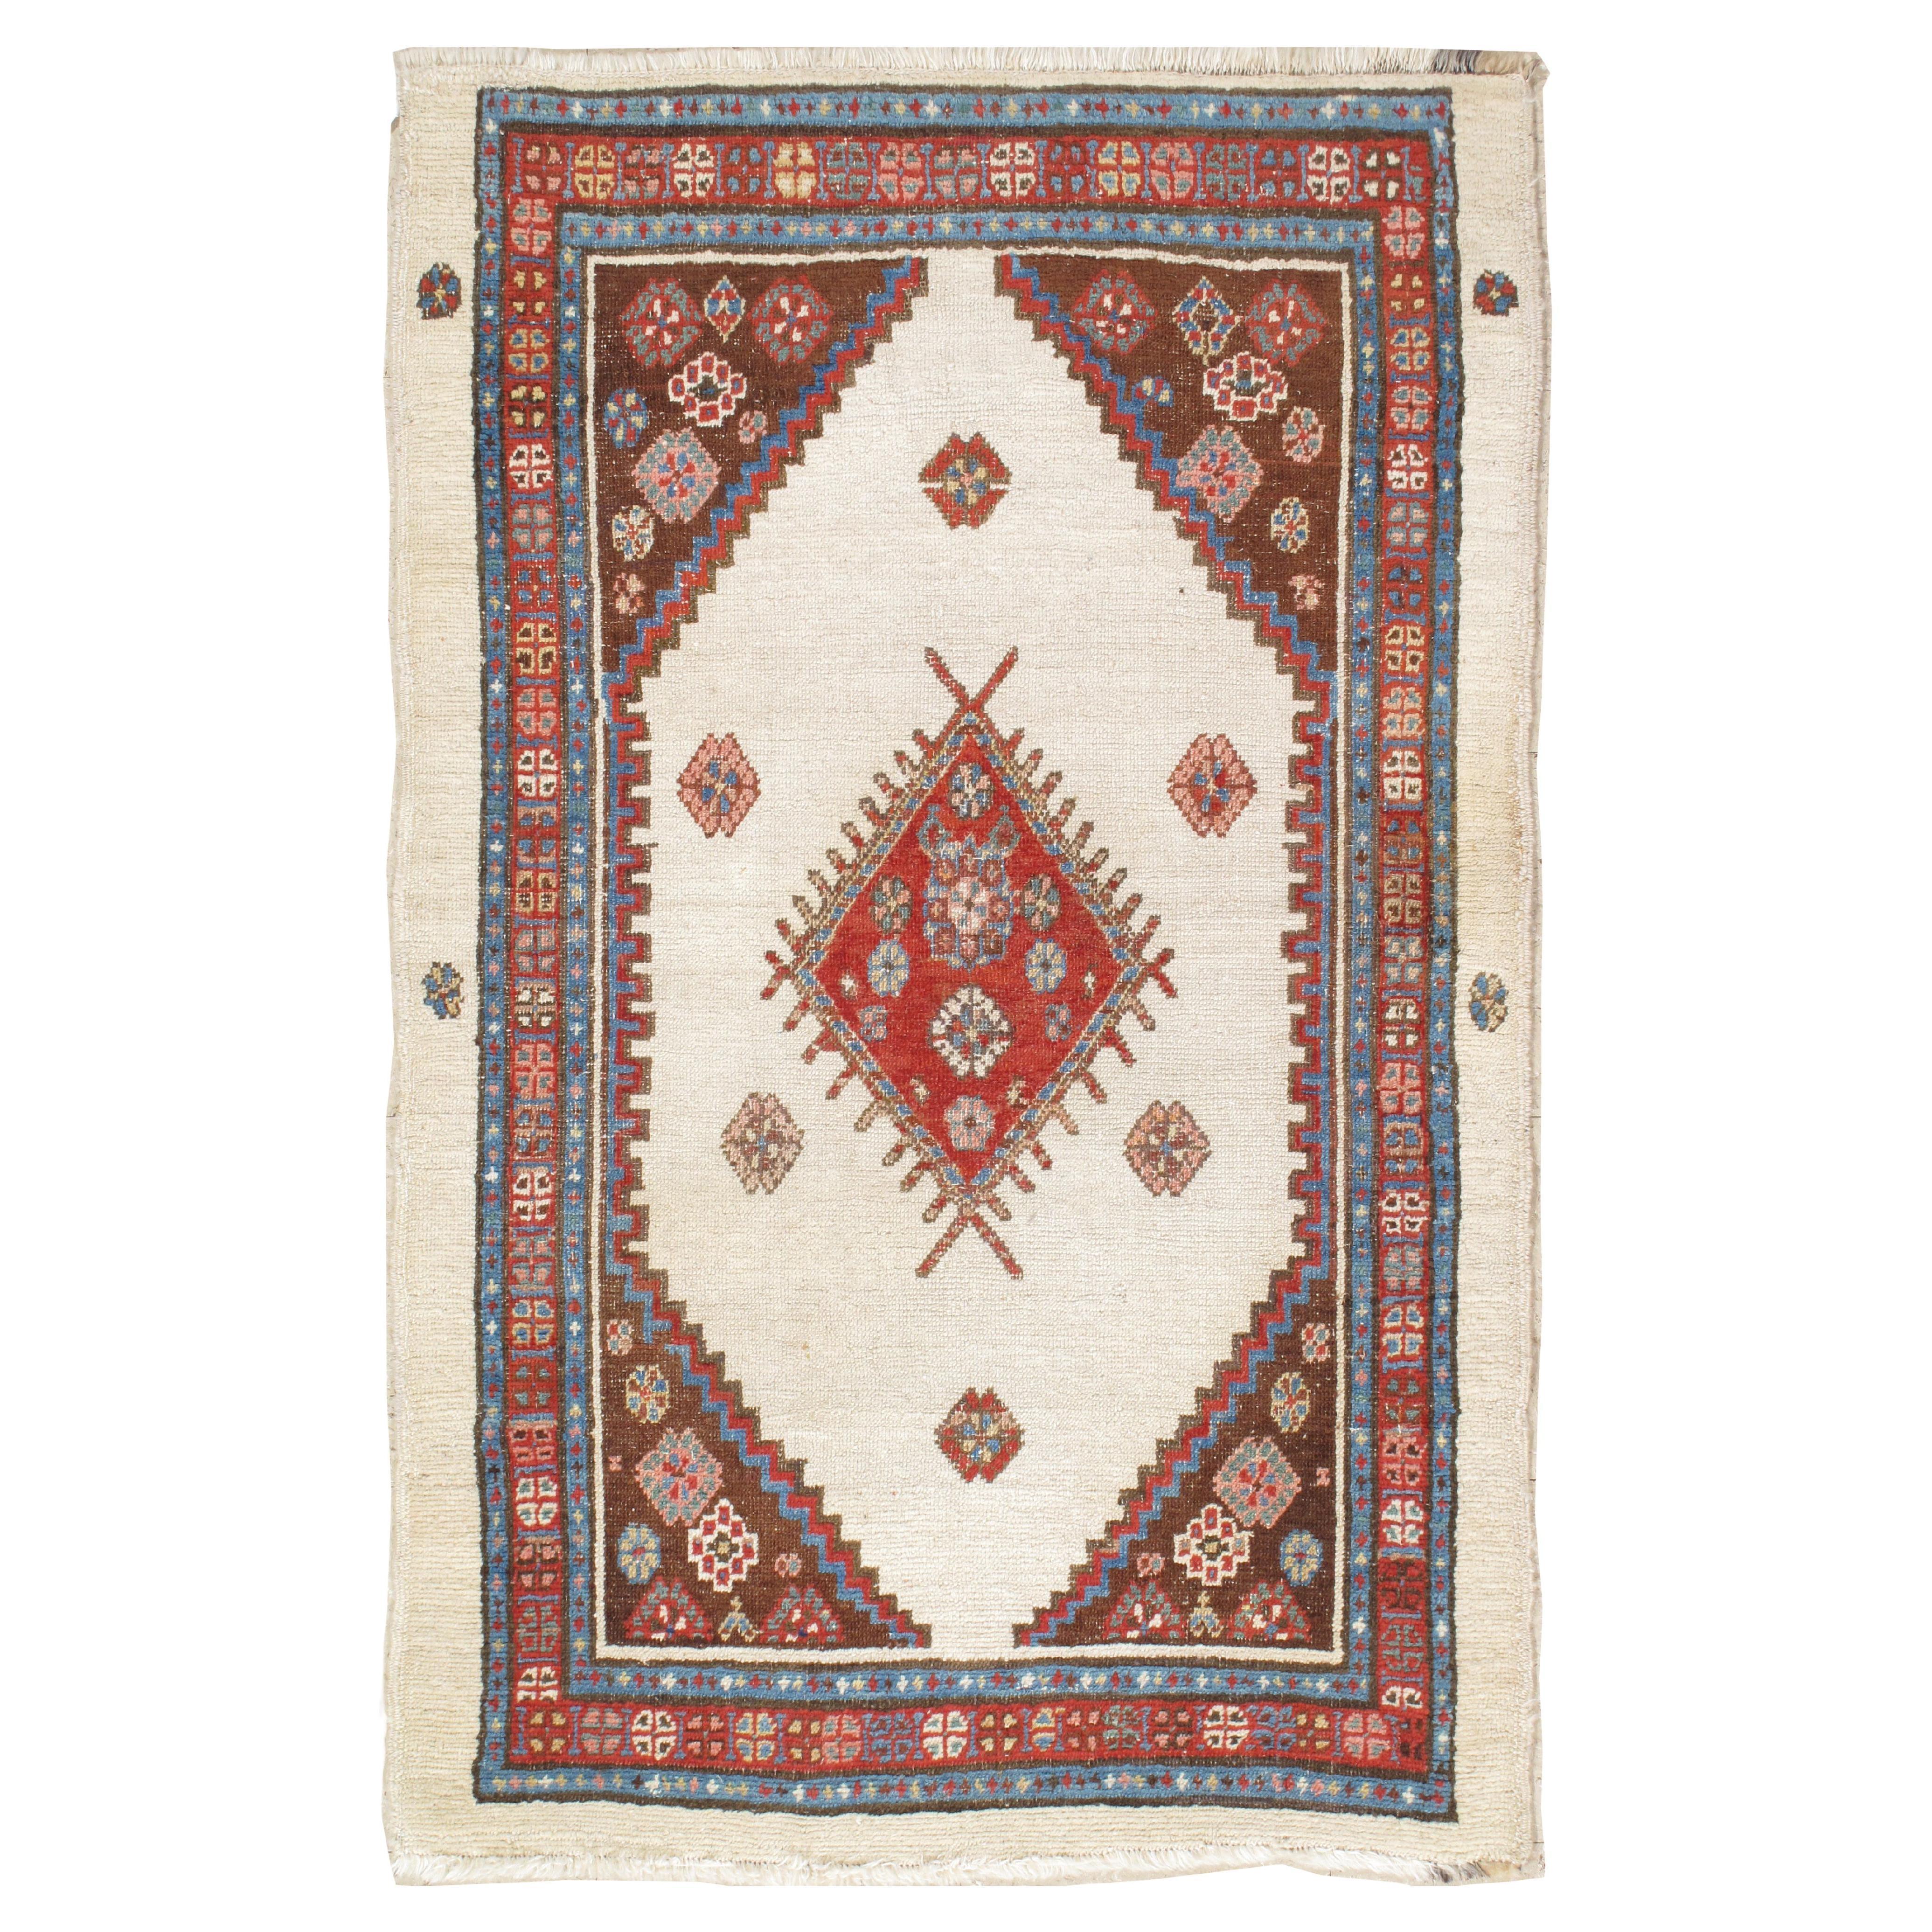 Antique Persian Bakhshaish Carpet, Handmade Wool Oriental Rug, Ivory and Rust